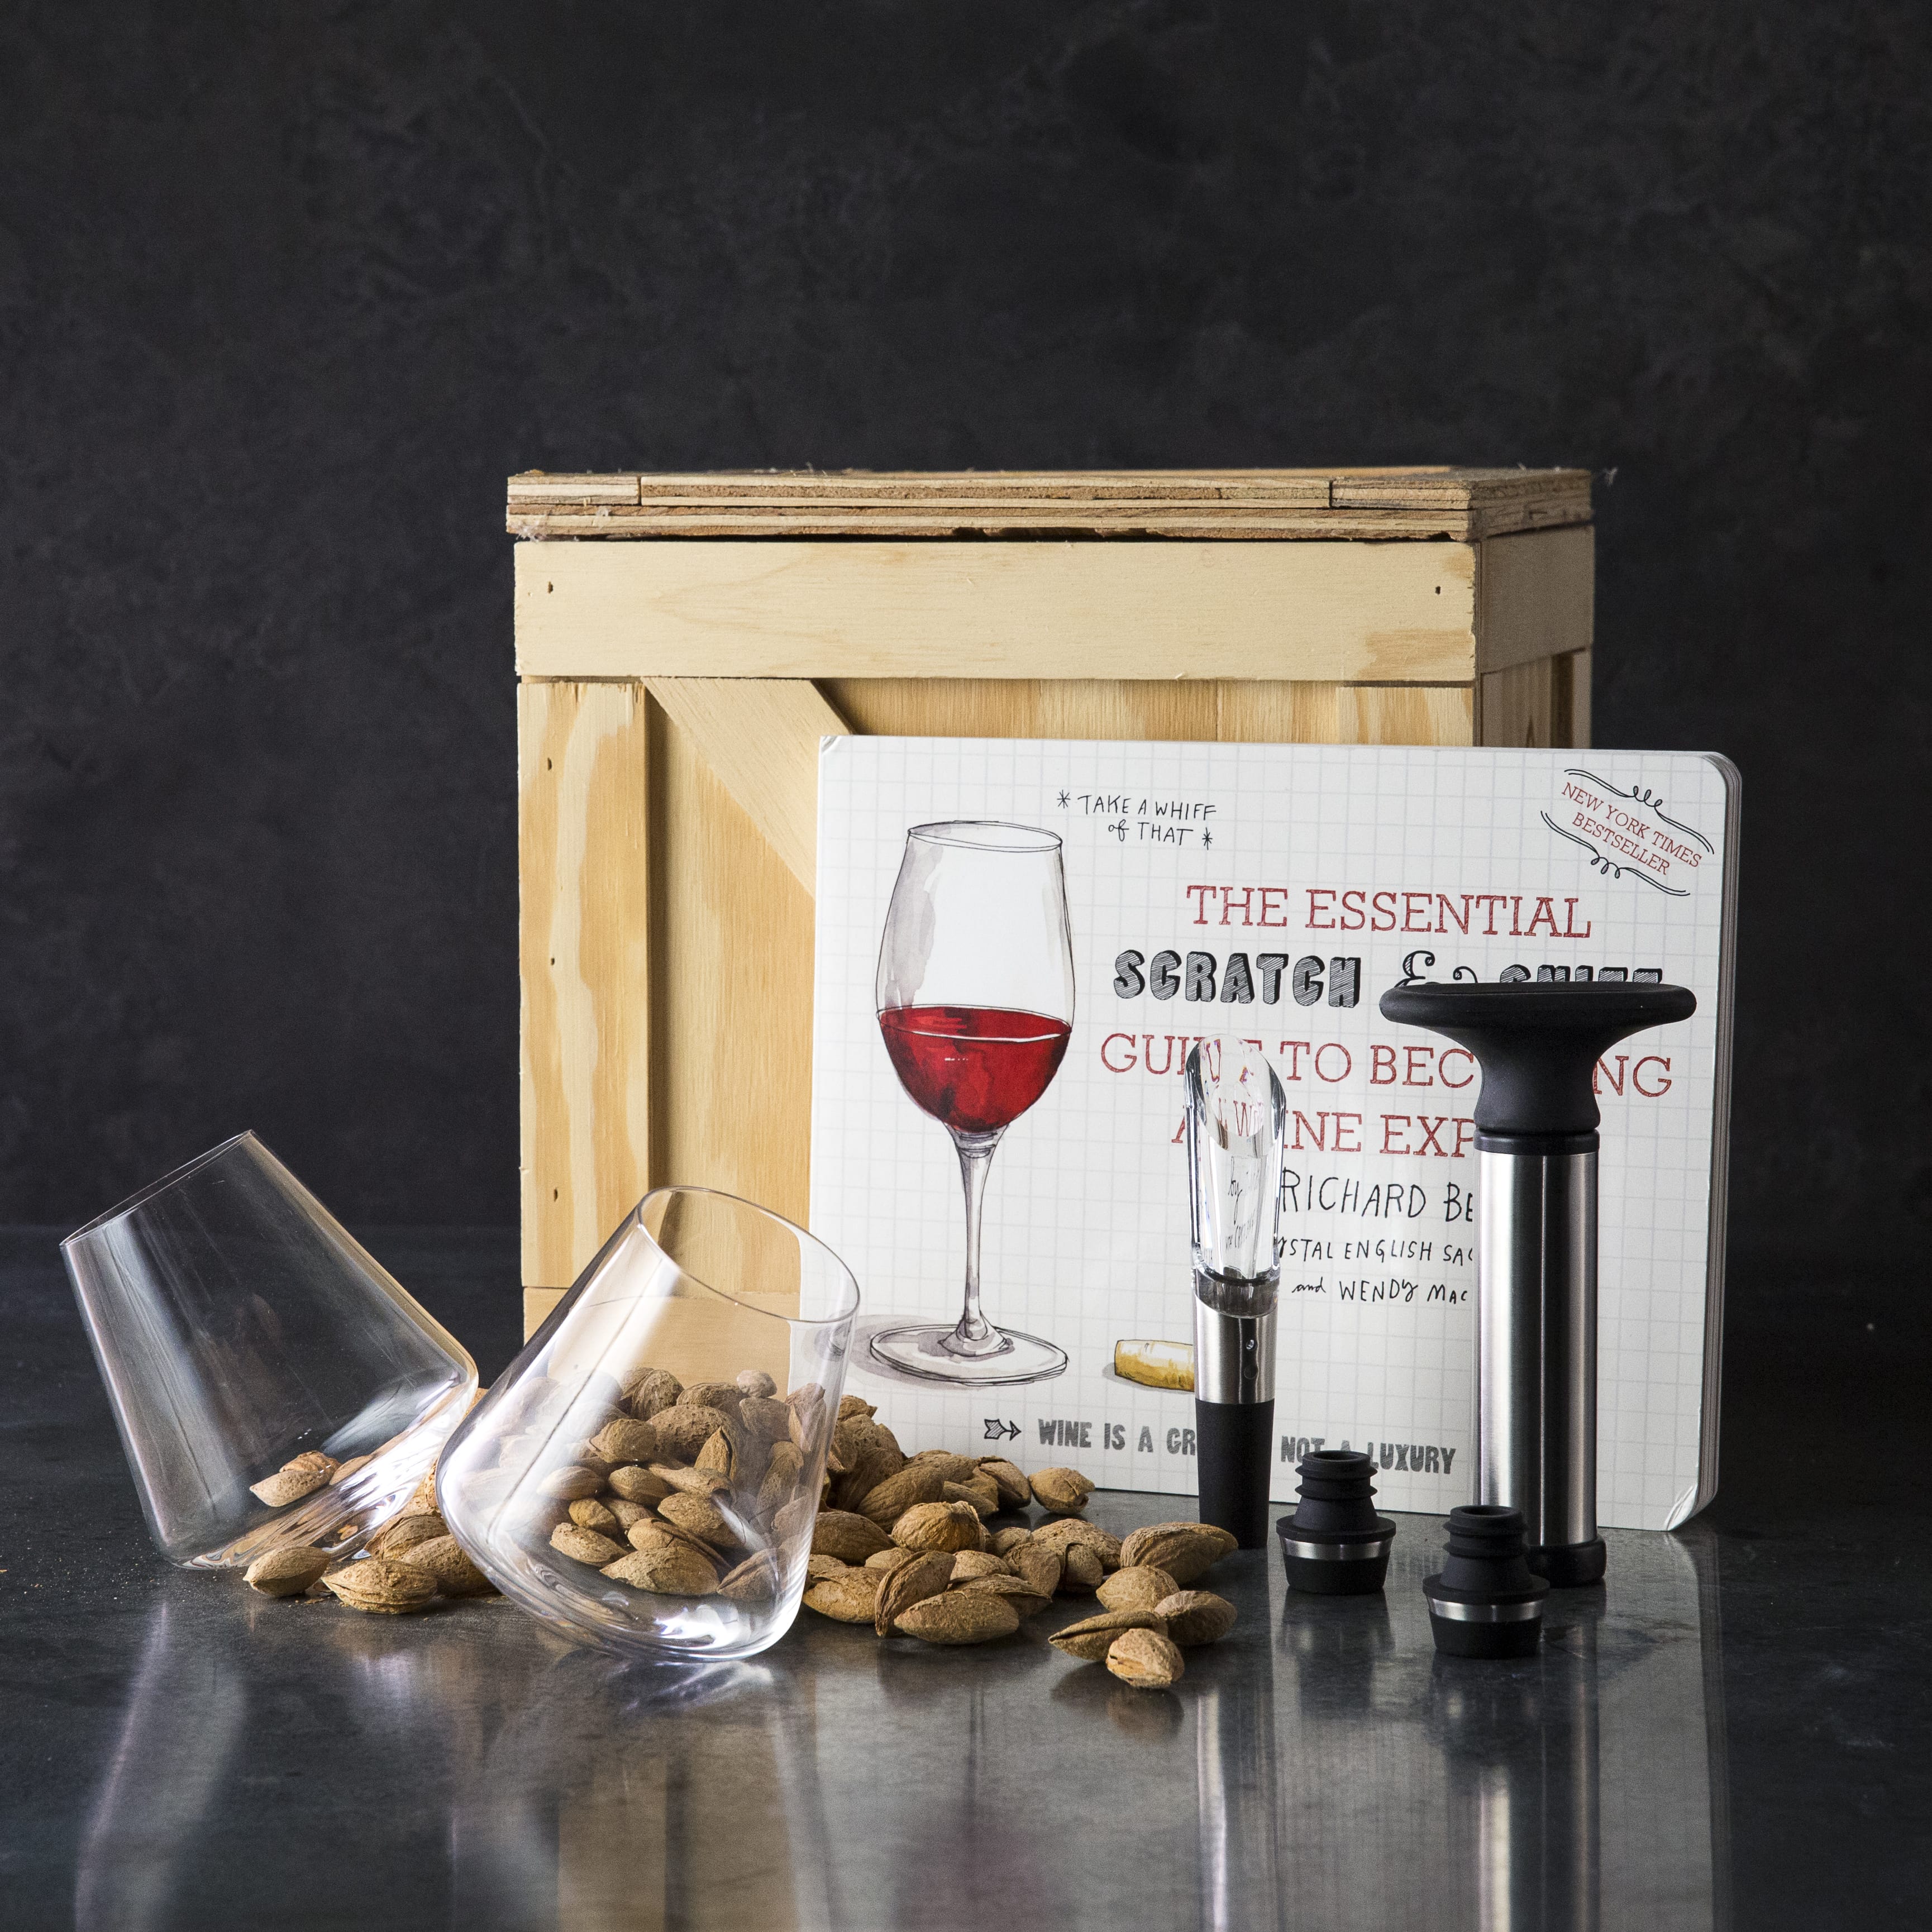 Wine Snob Starter Kit includes wine glasses, a fun wine book, aerator, wine preserver, and almonds.